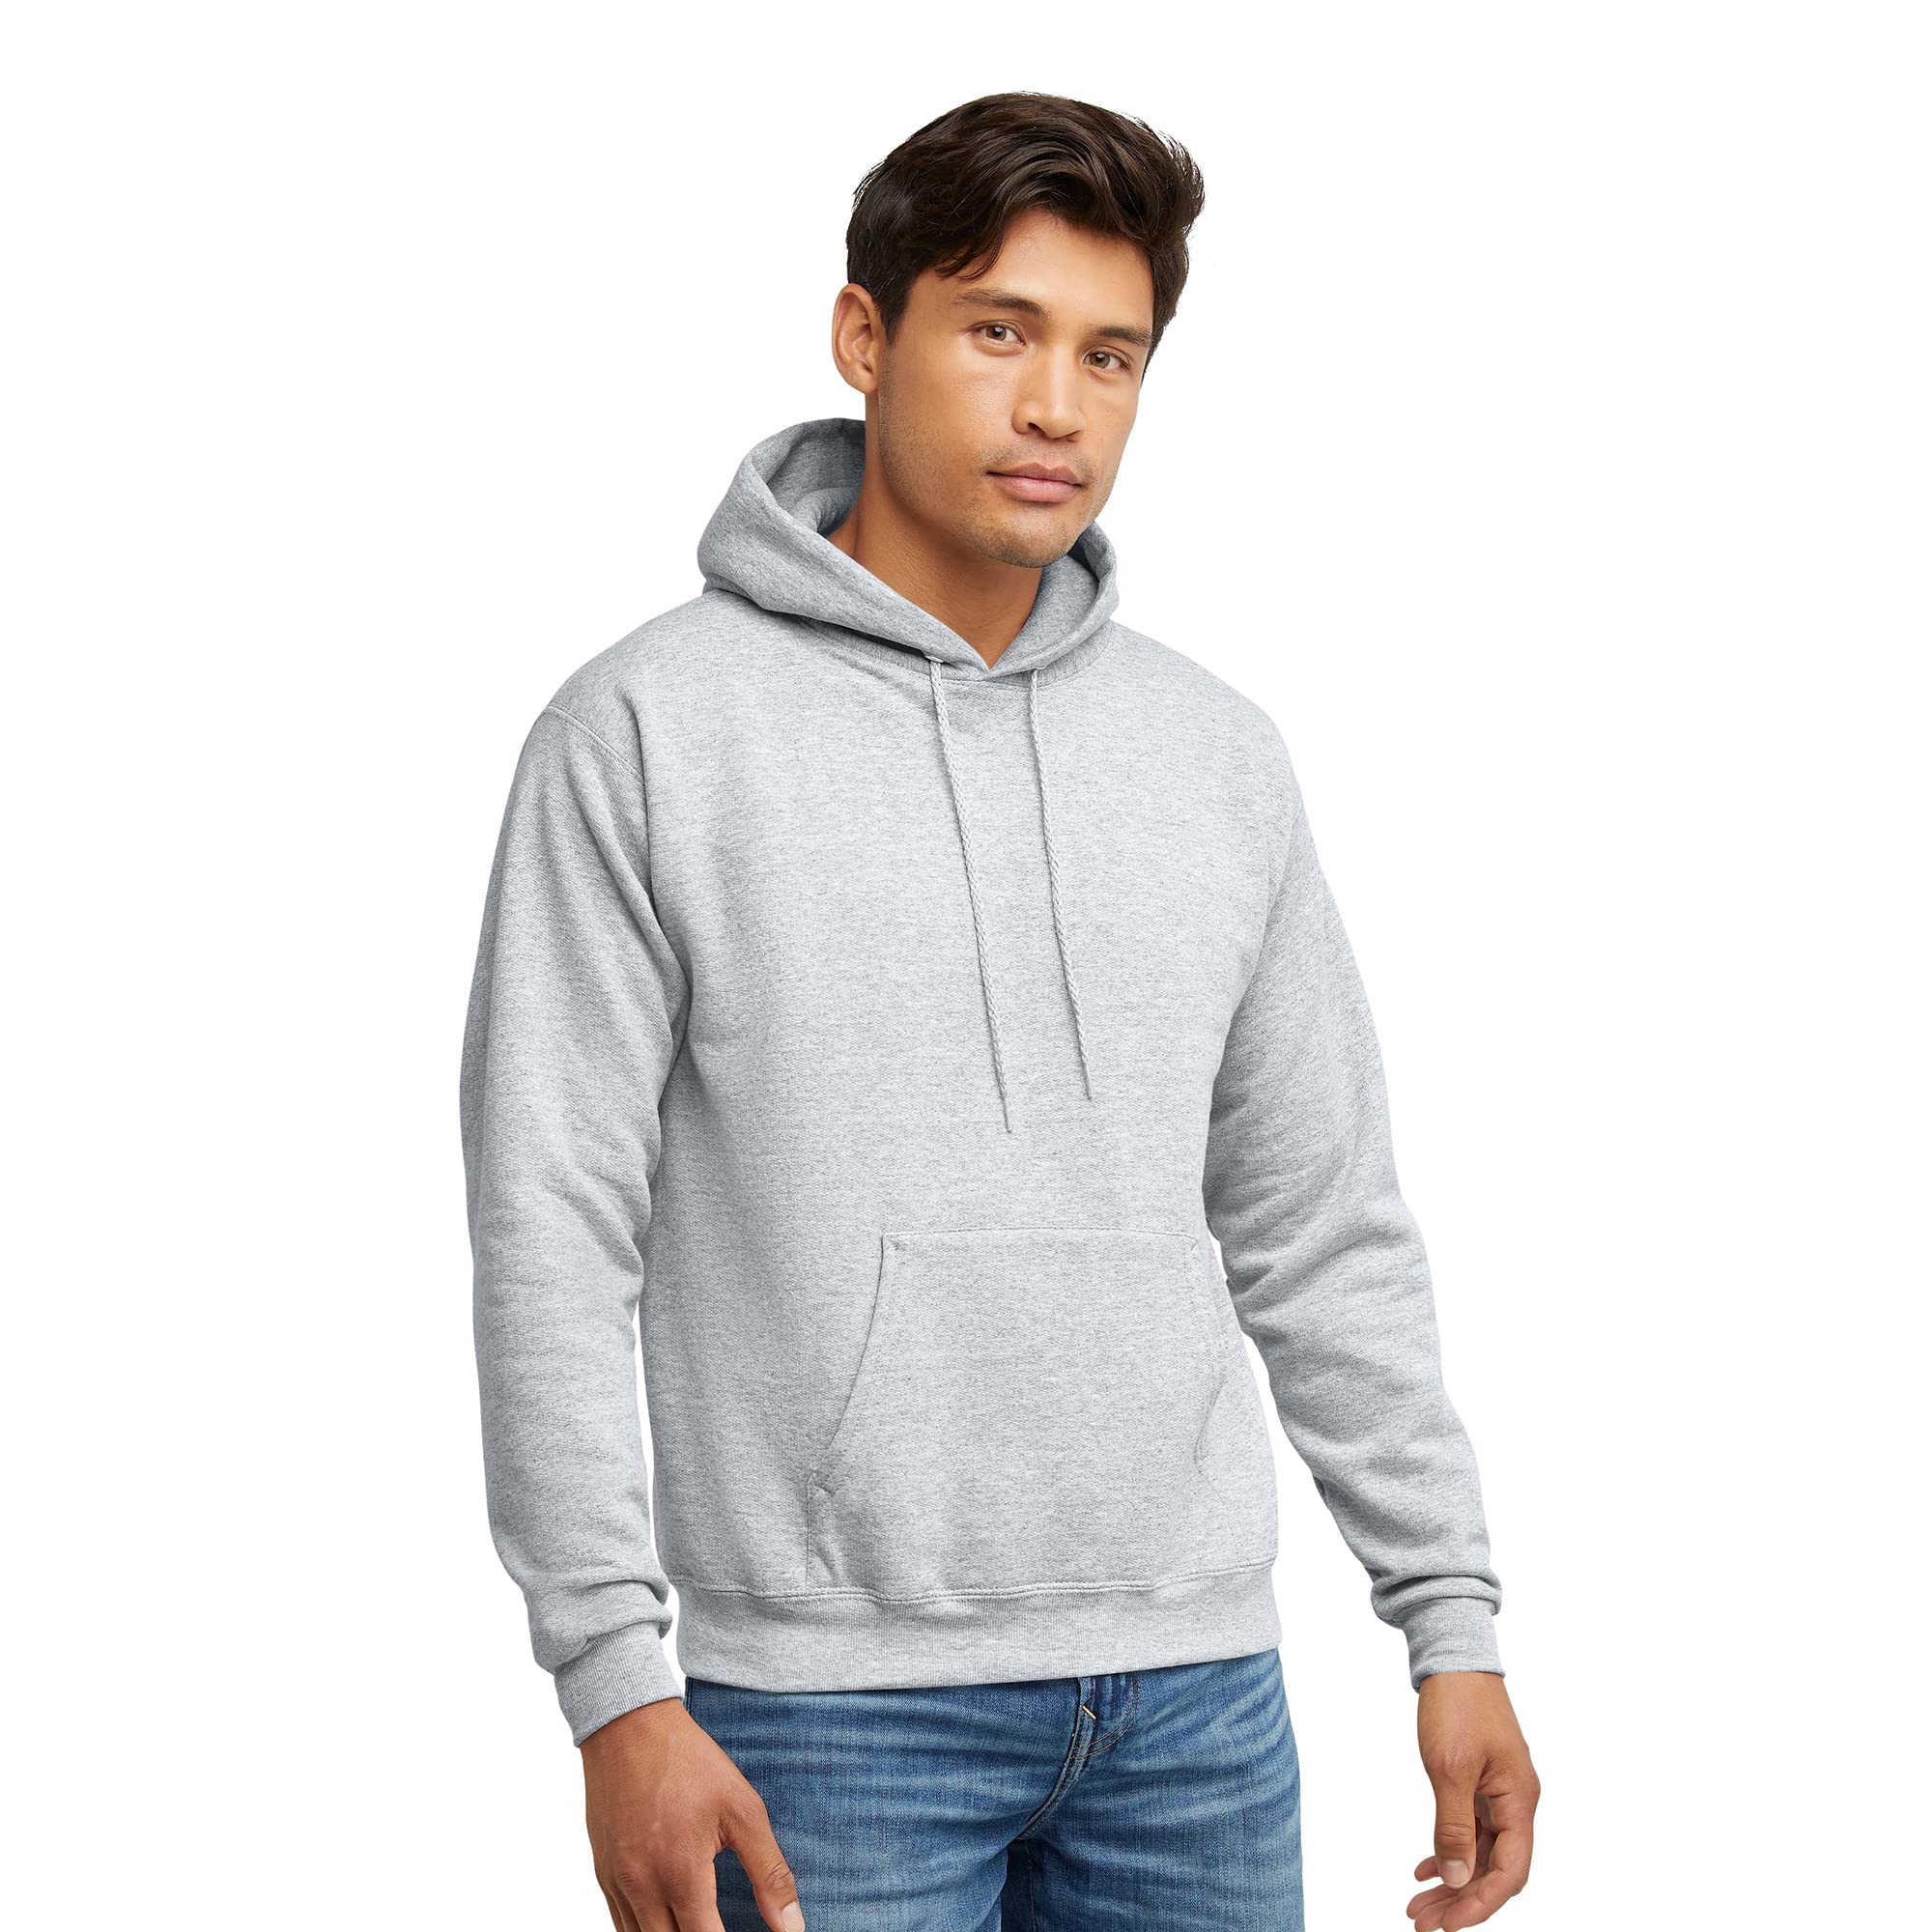 Hanes Men's Pullover EcoSmart Hooded Sweatshirt, ash, 4X Large